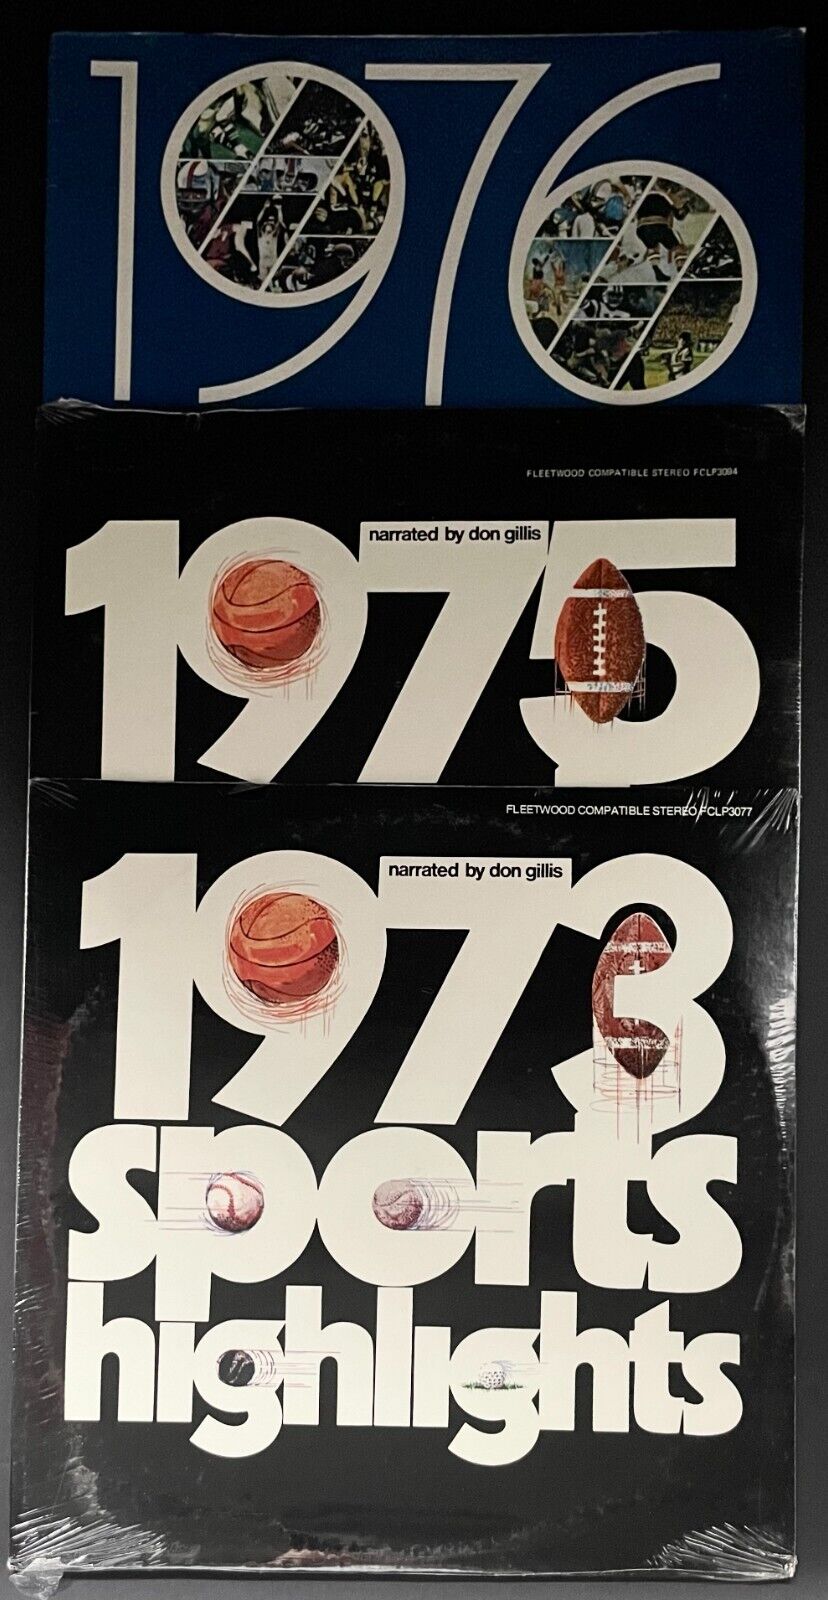 3 Sports Highlights LP Records 1973 + 1975 + 1976 Sealed Sports Album Don Gillis